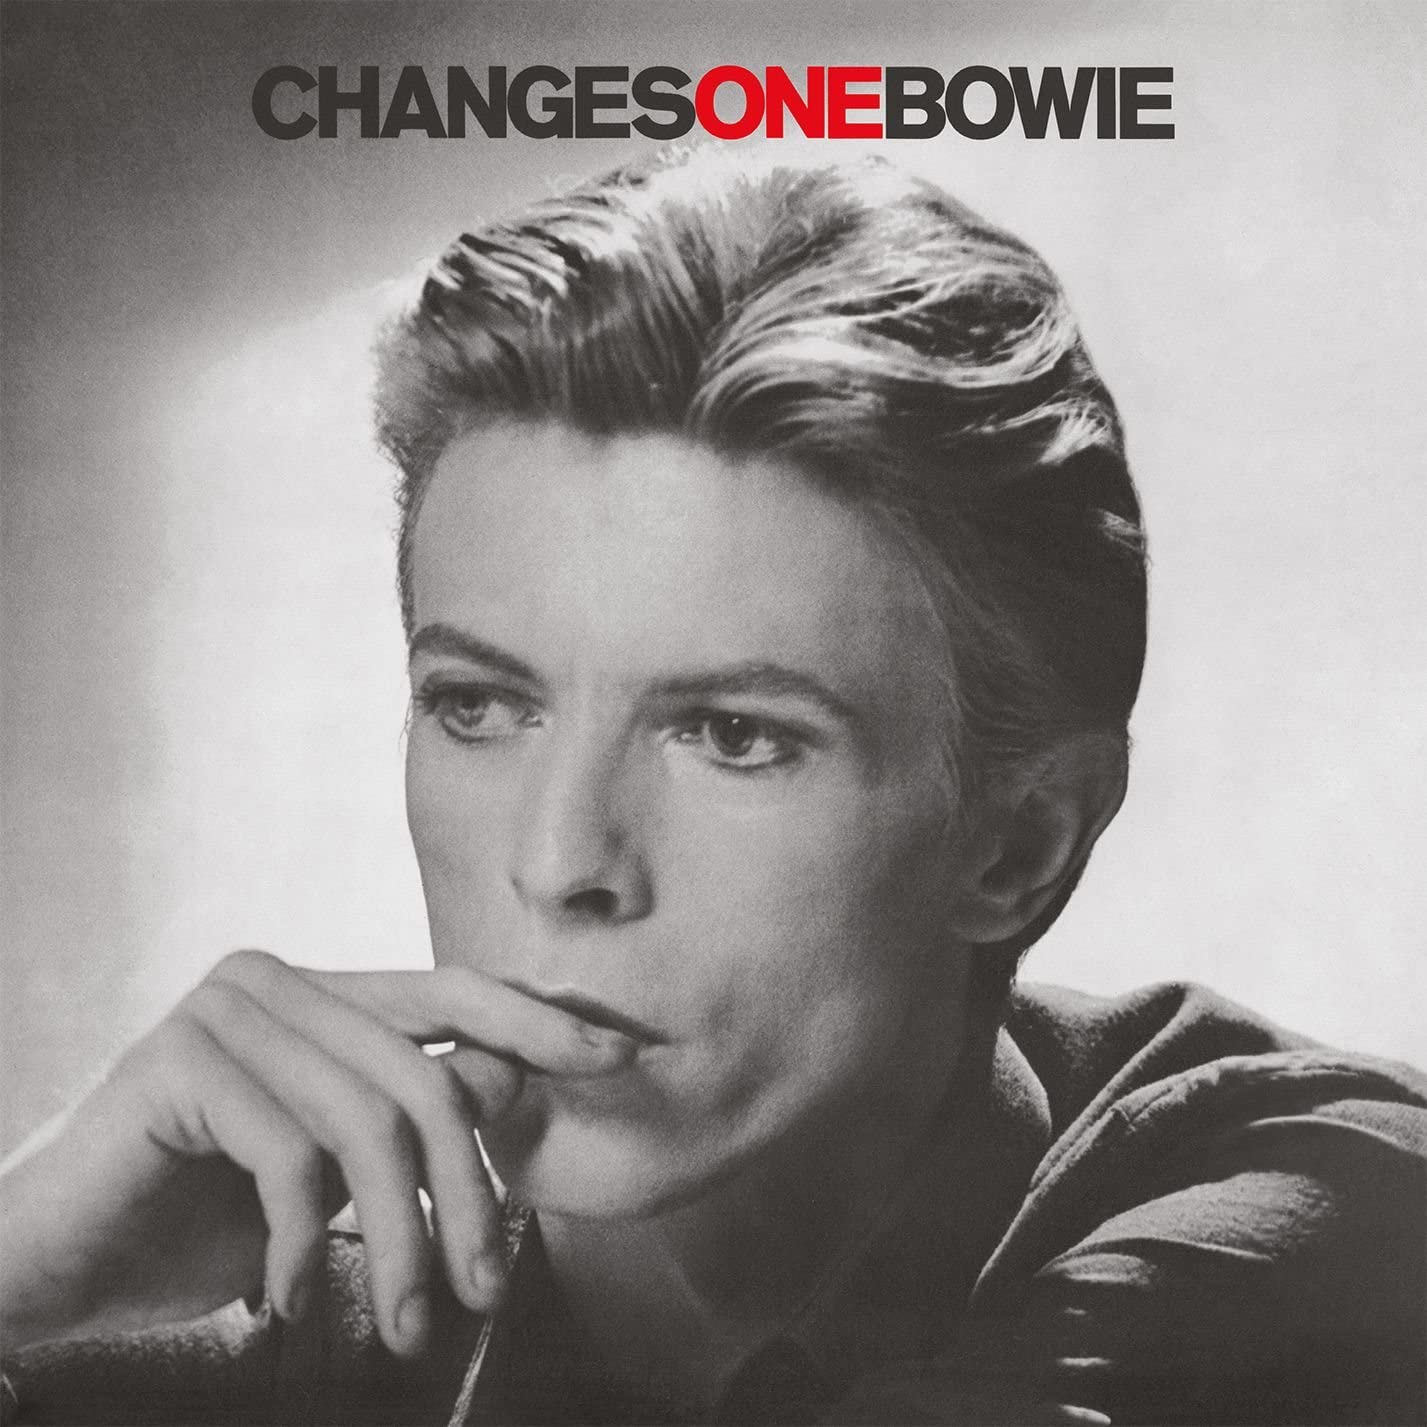 DAVID BOWIE - Changes One Bowie (40th Anniversary) - LP - 180g Vinyl